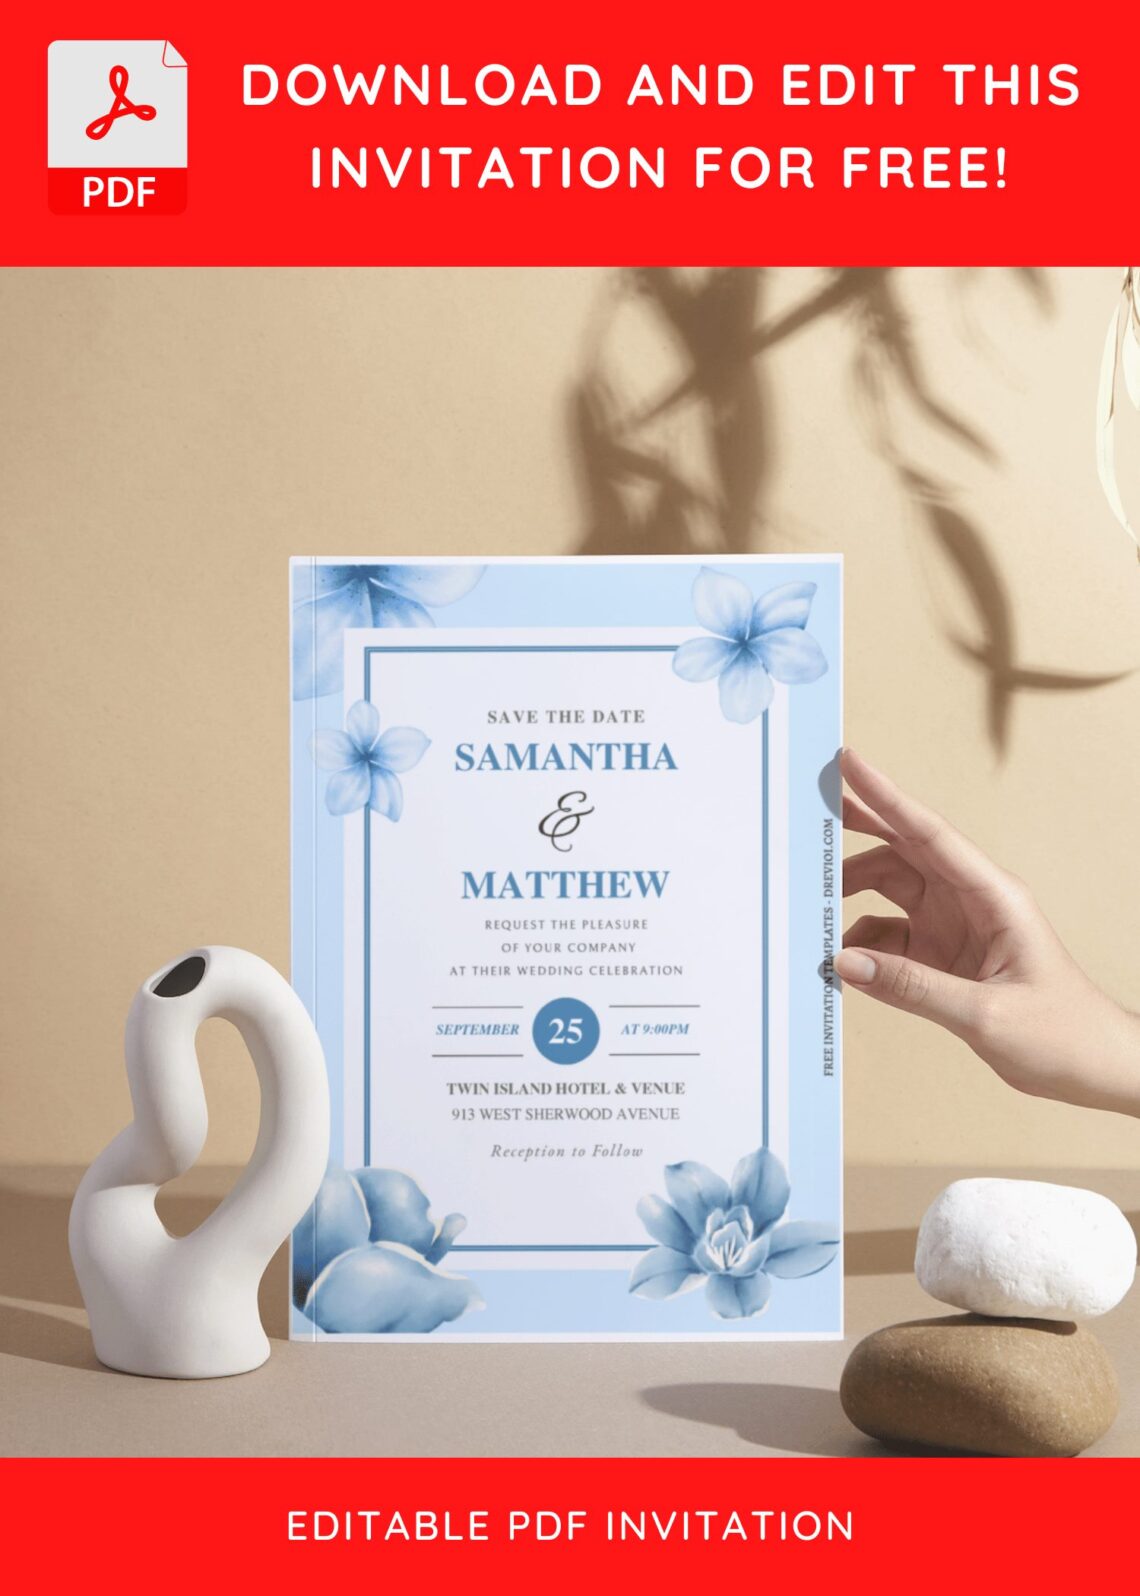 (Free Editable PDF) Rustic & Earthy Blue Floral Wedding Invitation Templates I